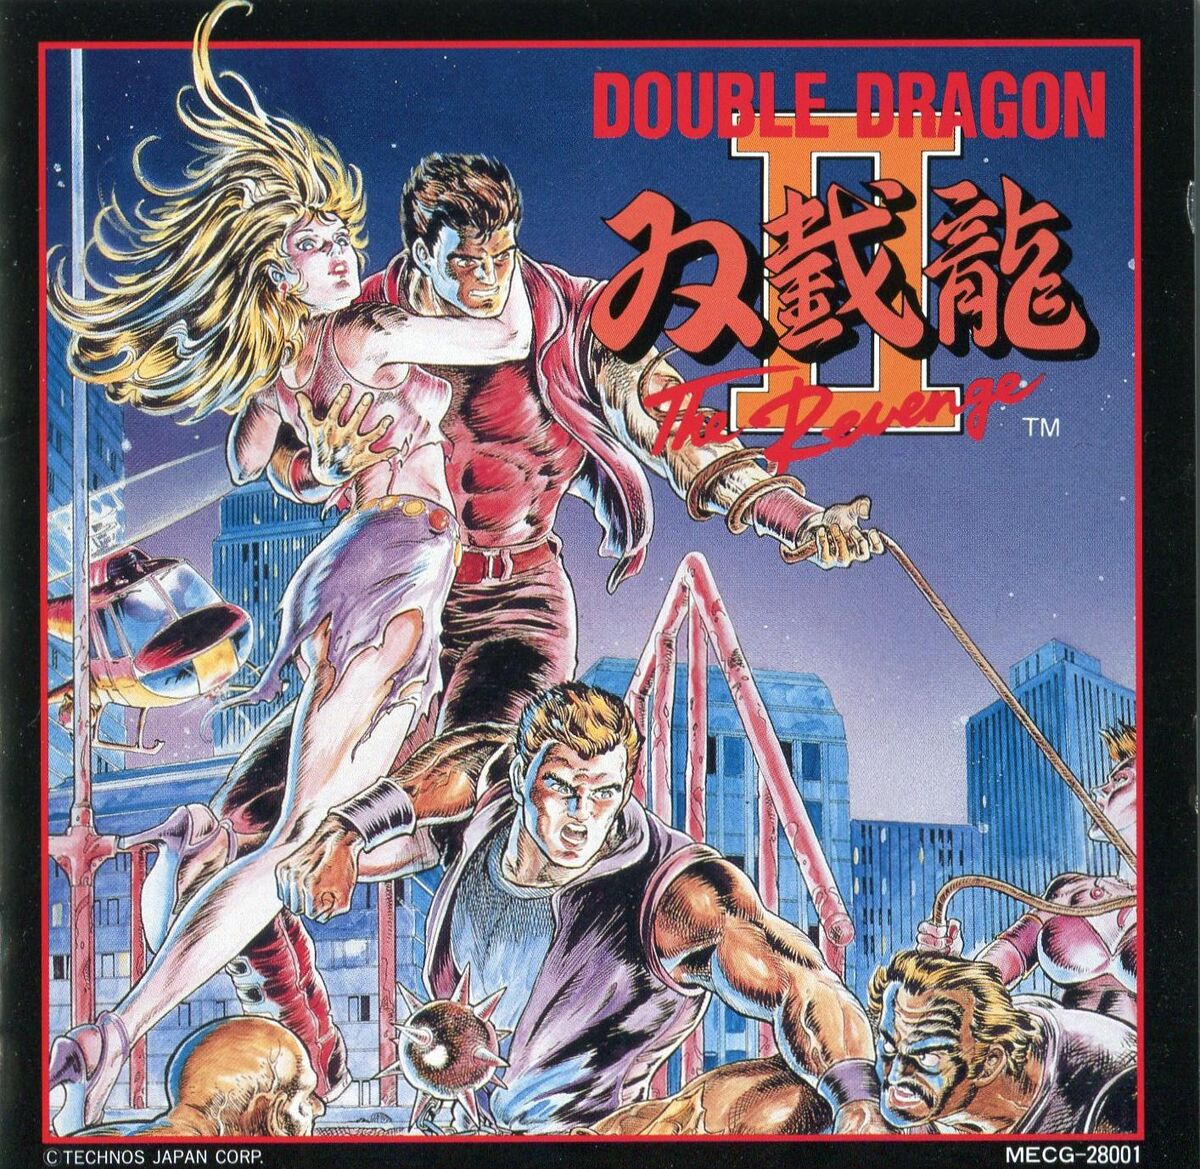 Double Dragon II: The Revenge - Wikipedia